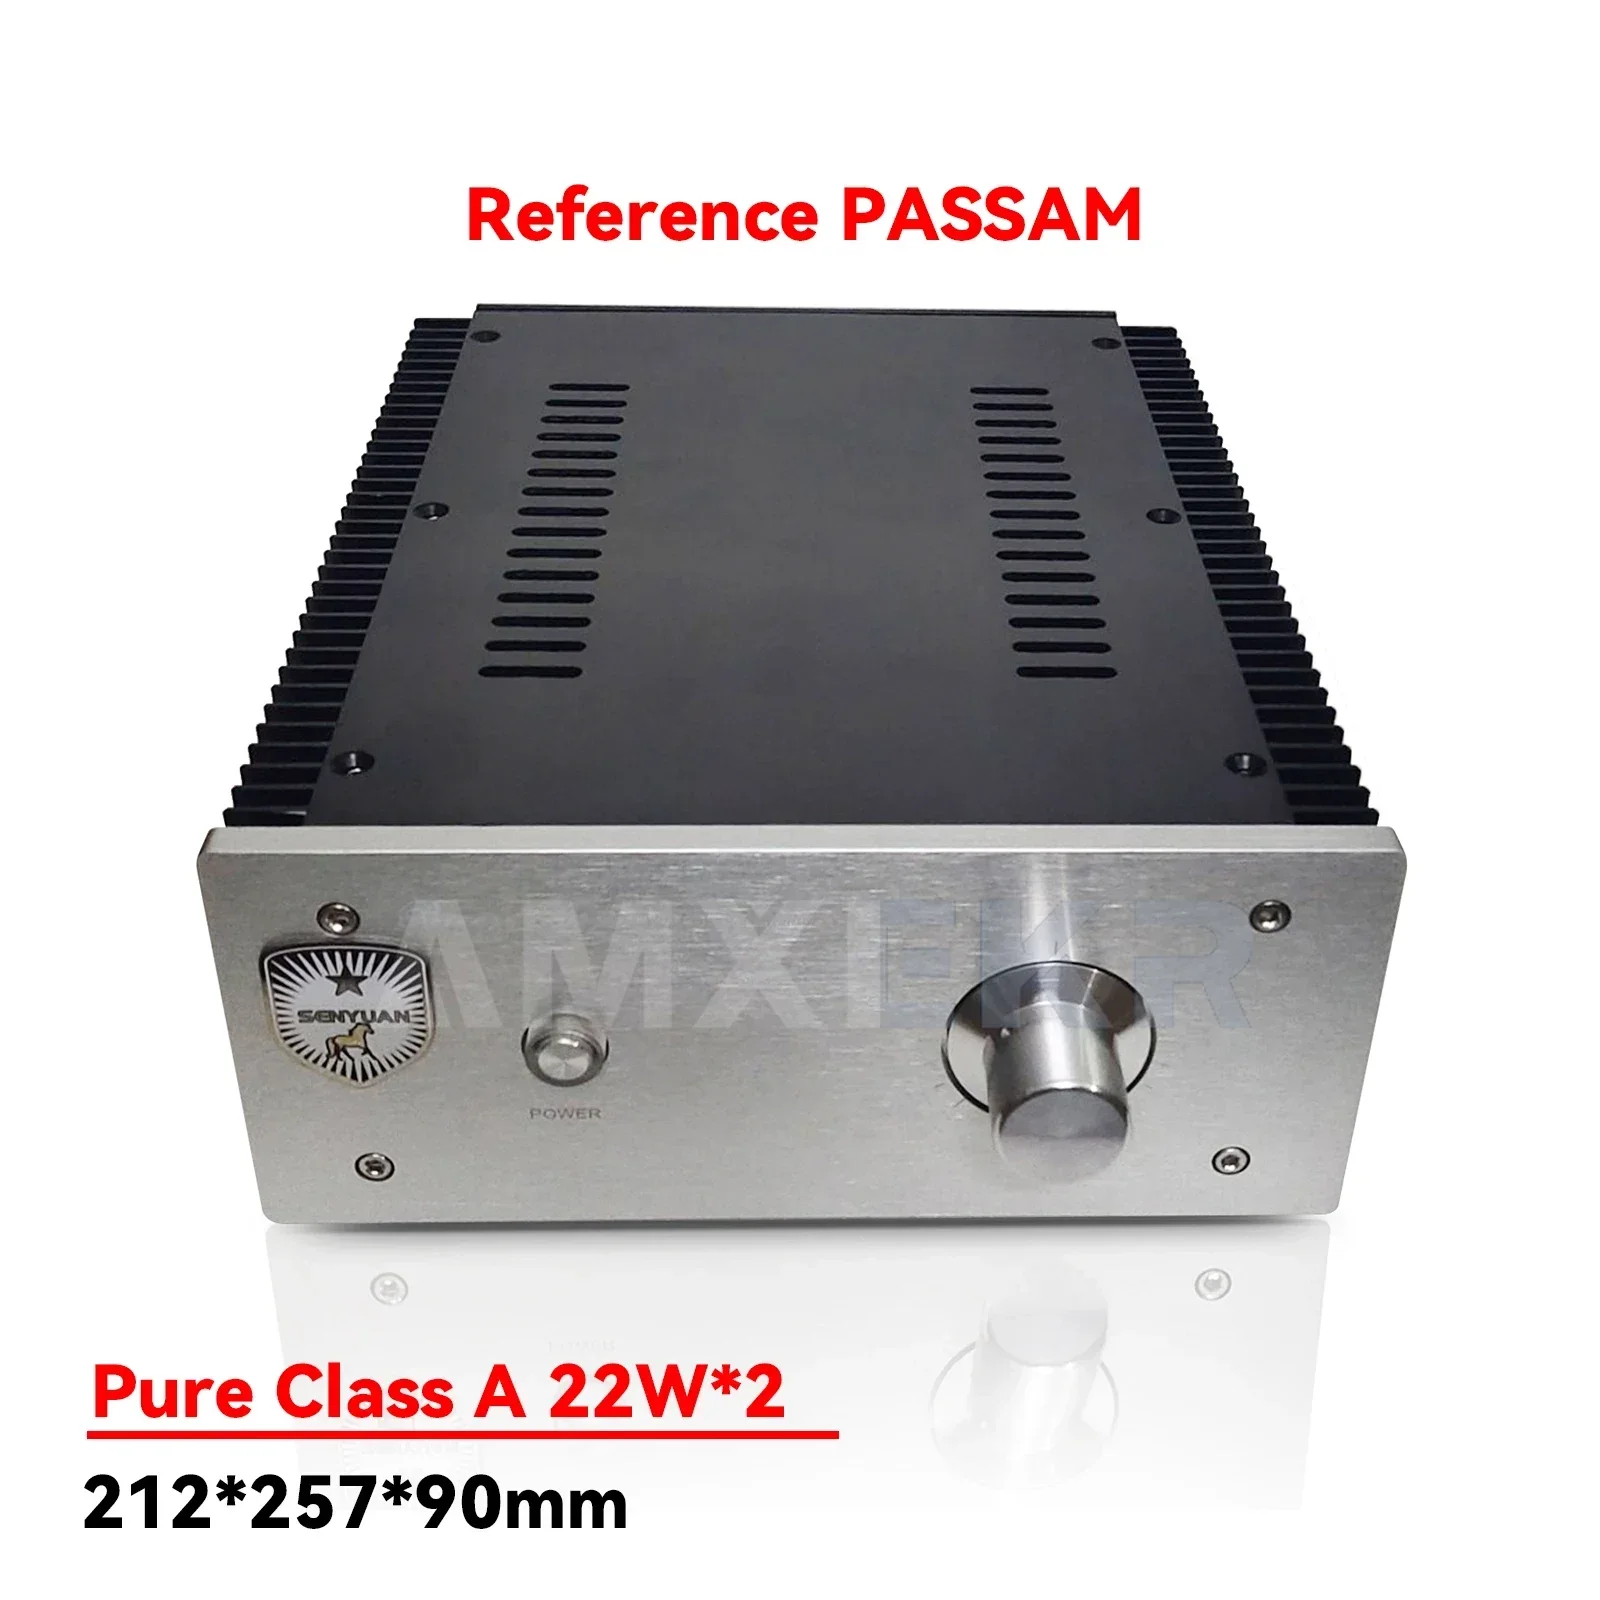 

AMXEKR Reference PASS AM Field Effect Tube Class A Power Amplifier 2.0 Stereo 22W Amplifier Is Better Than 1969 Music Fax A1